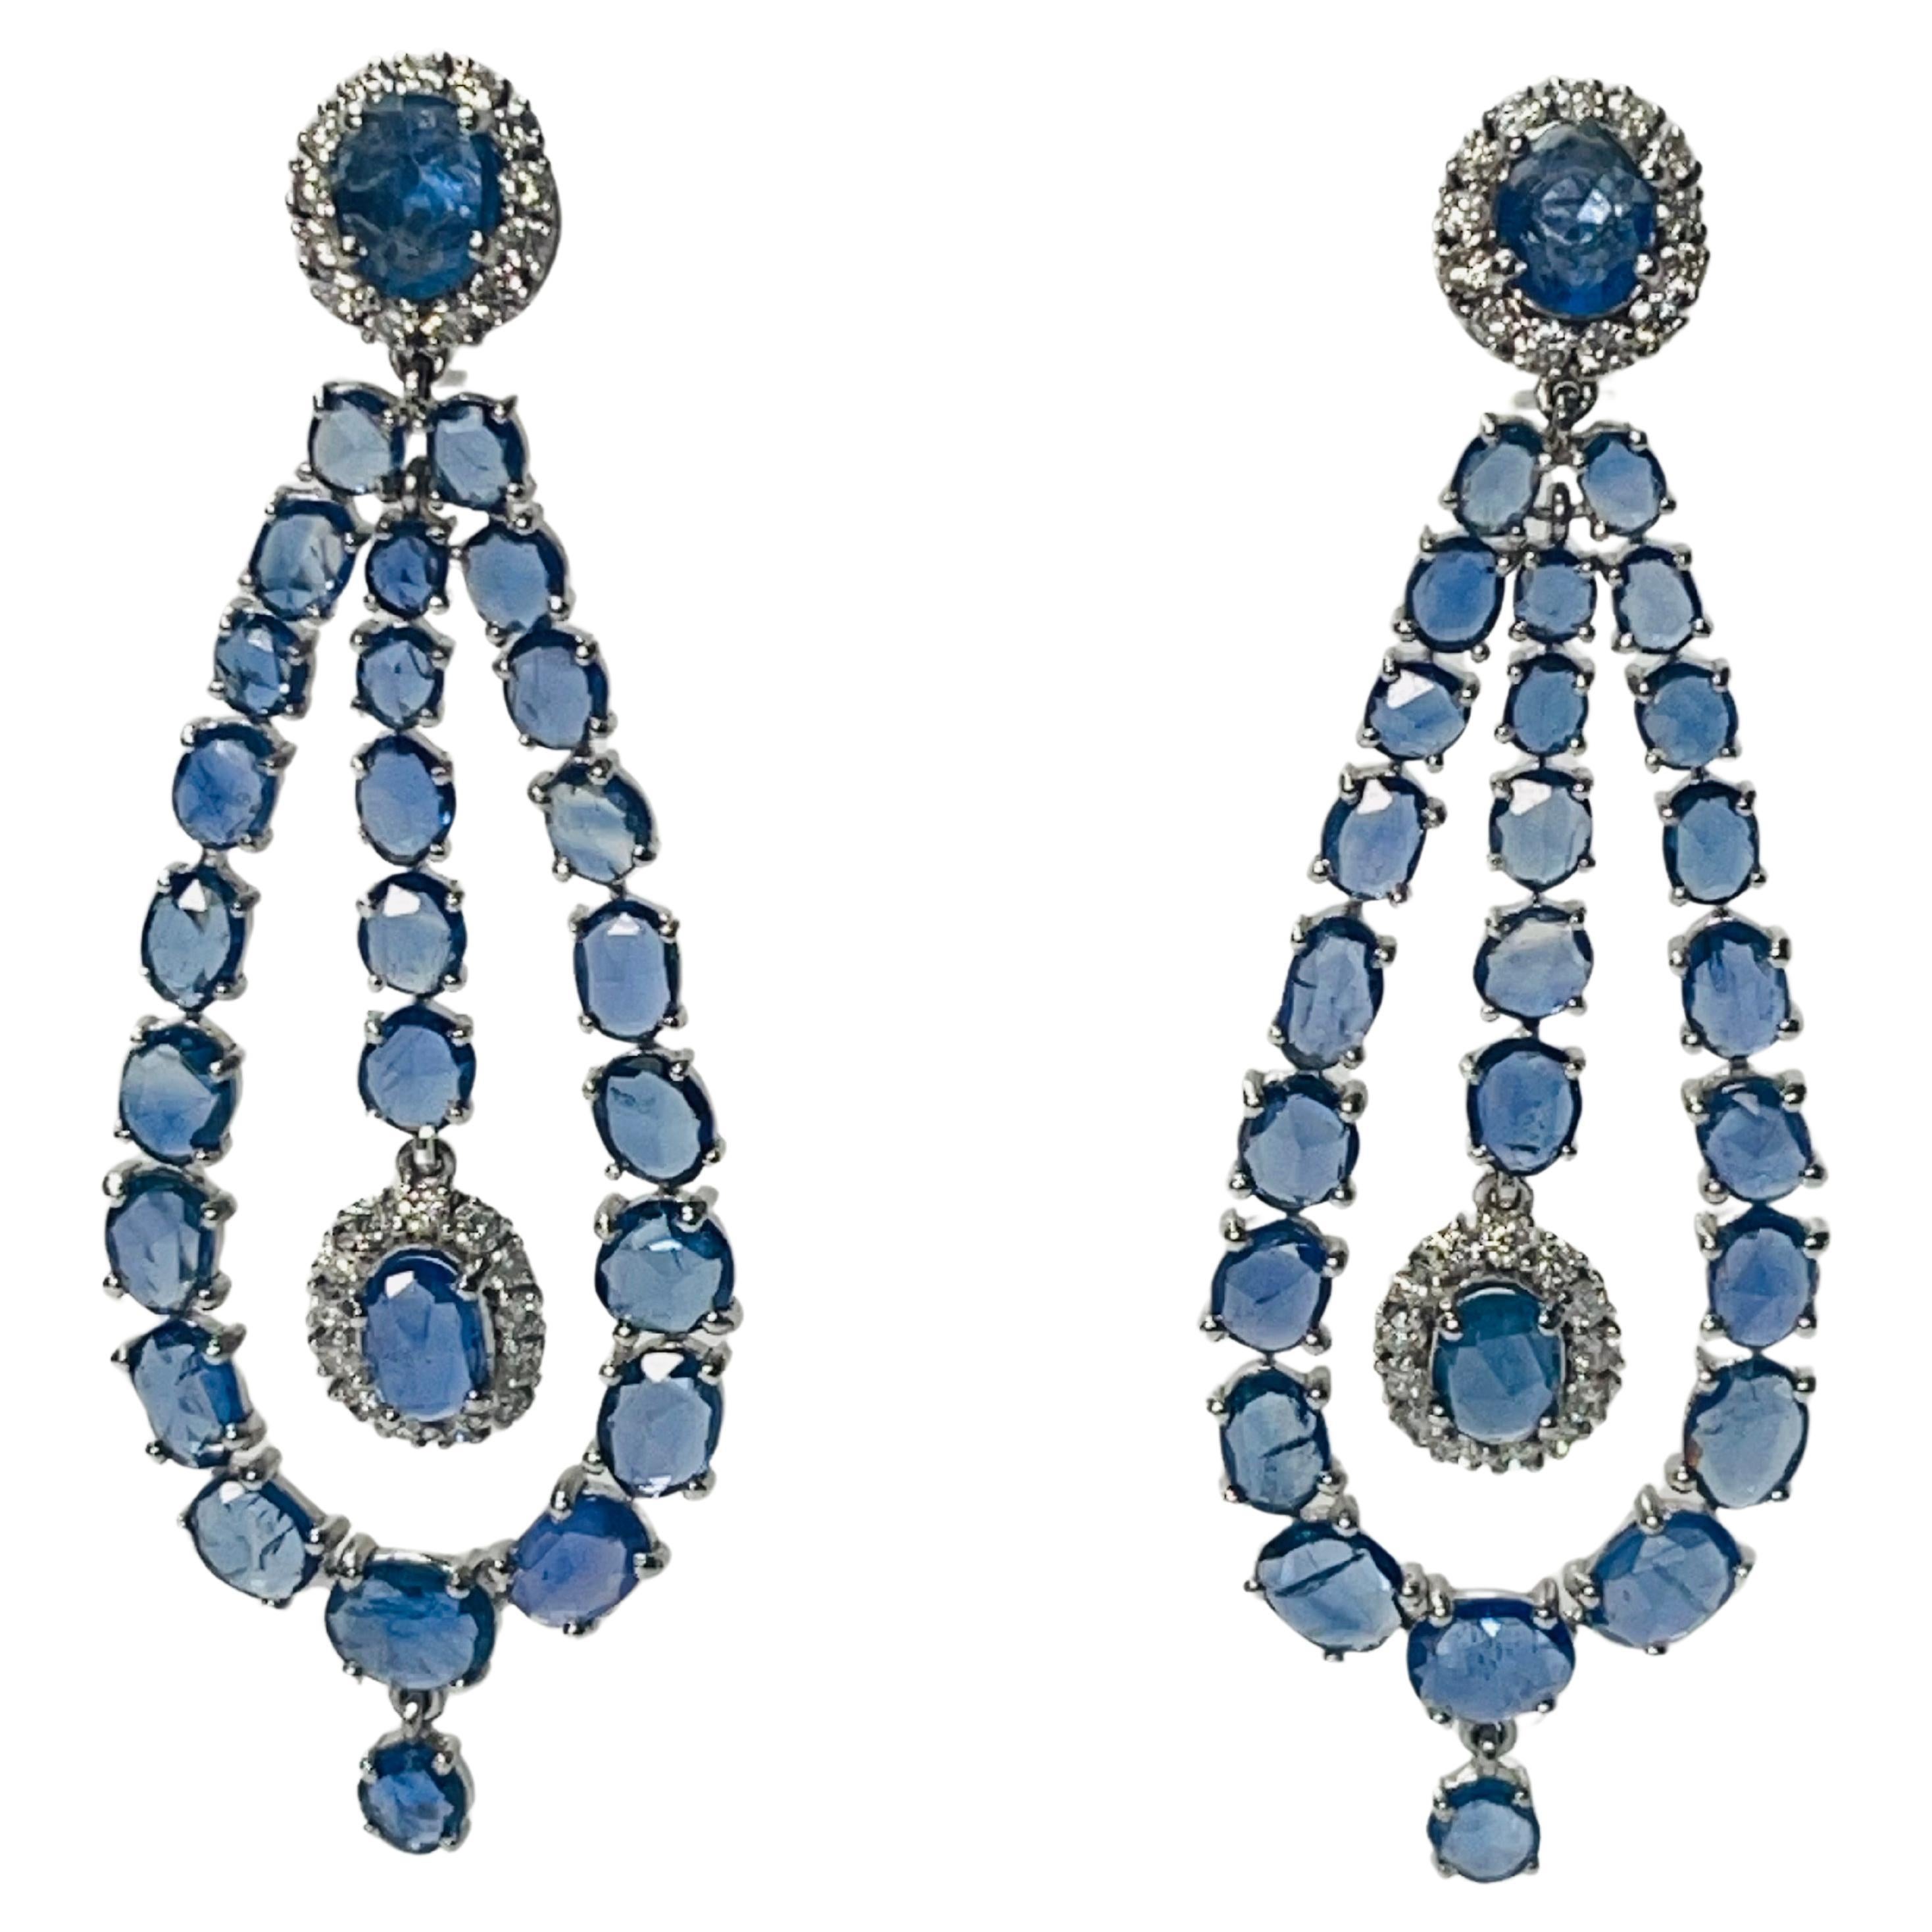  Blue Sapphire And Diamond Chandelier Earrings In 18K White Gold. 